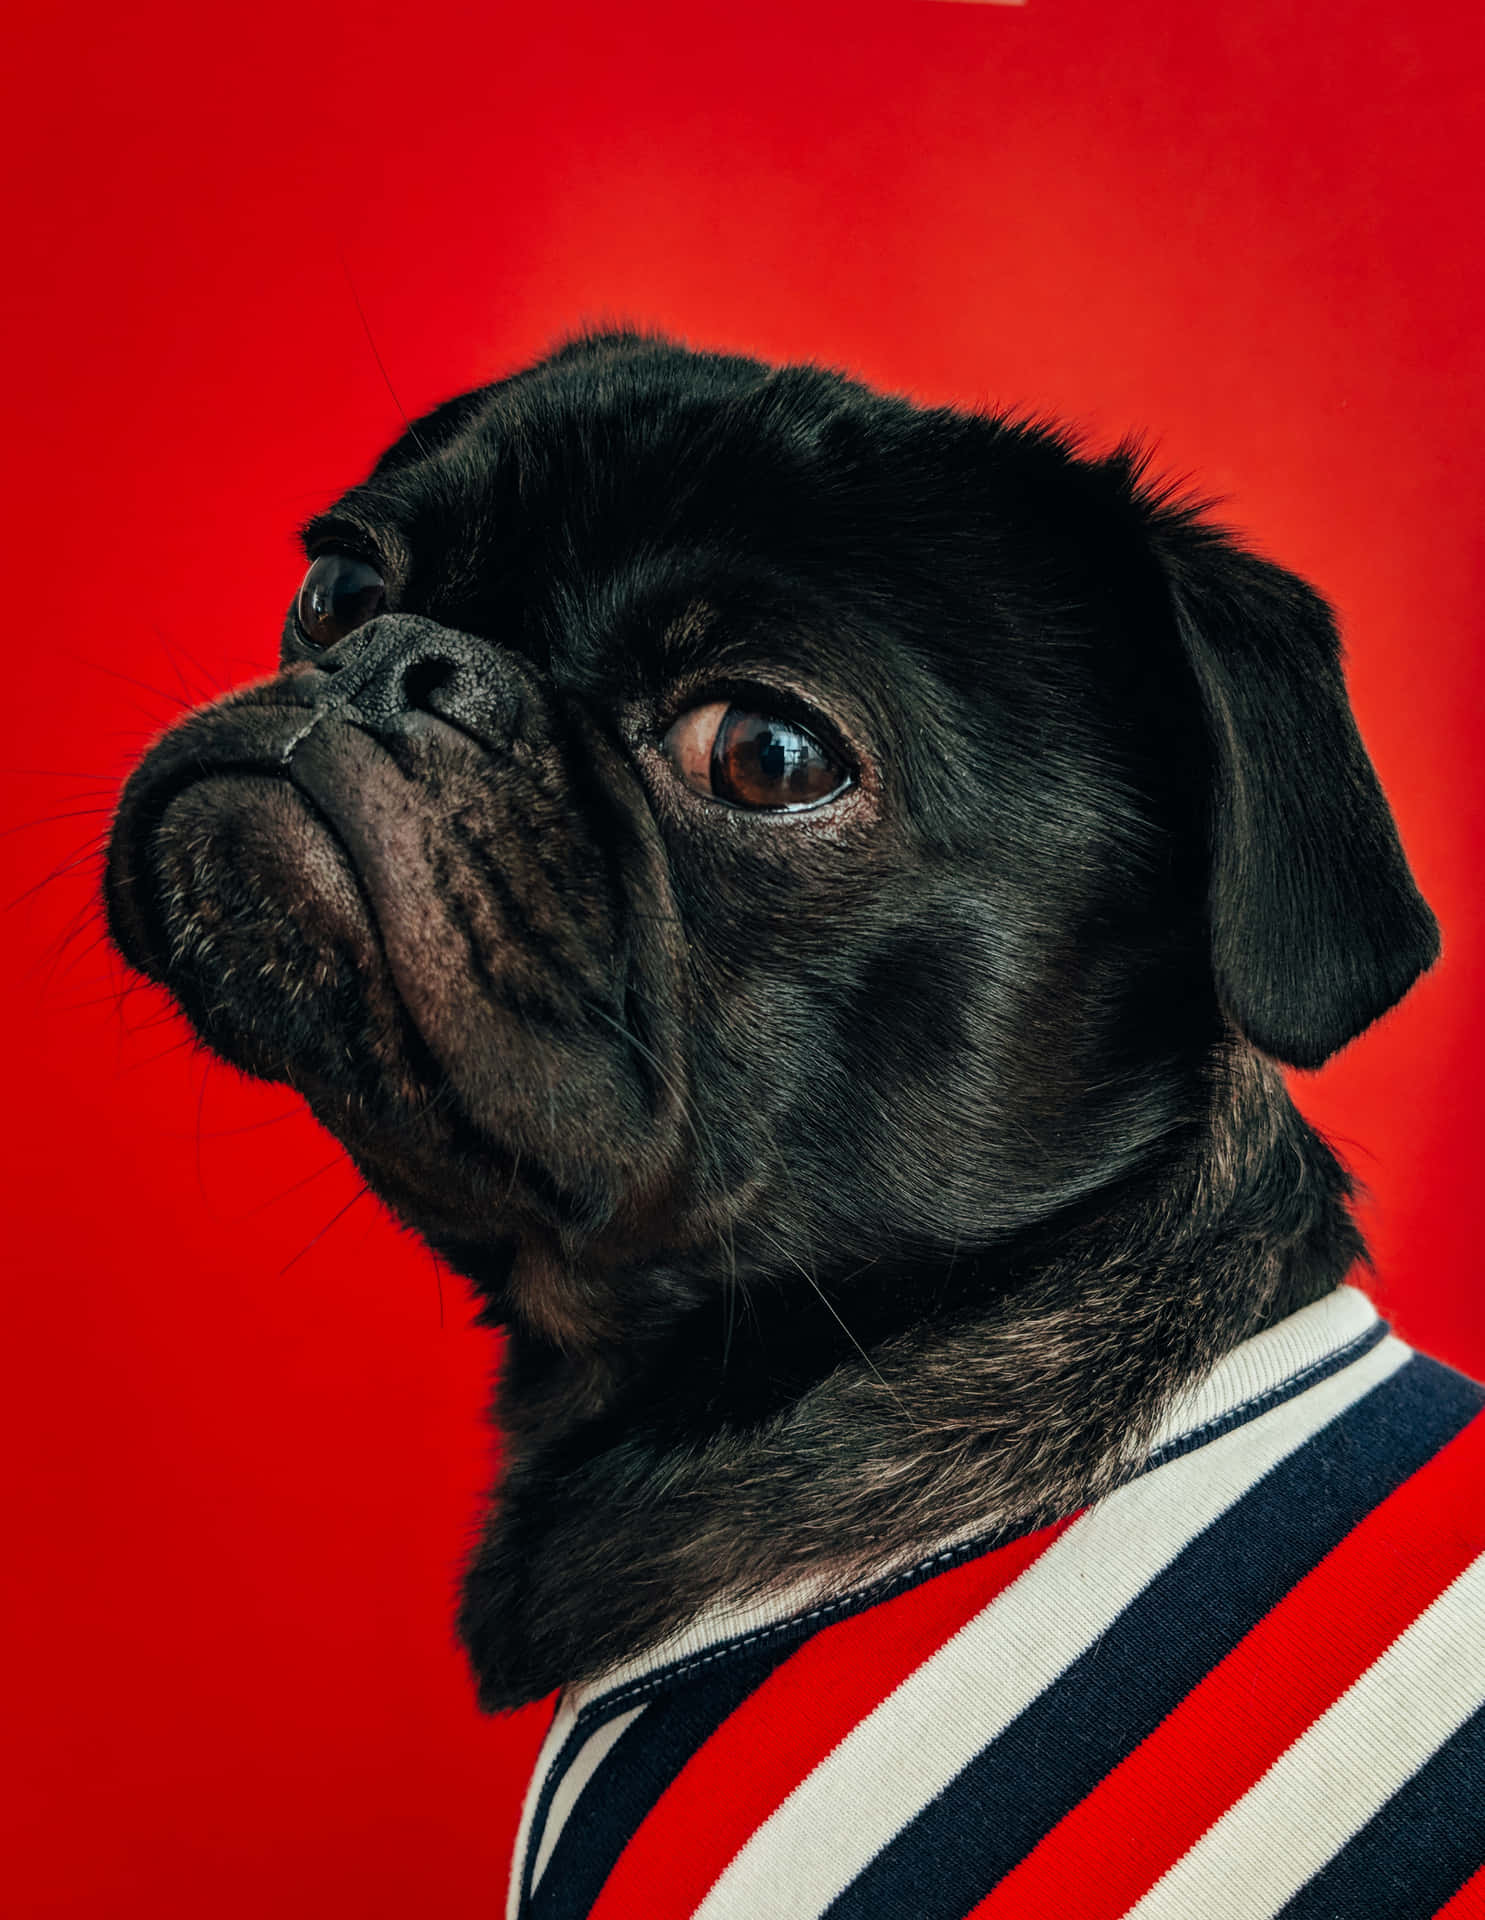 Stripe Shirt Pug Dog Wallpaper